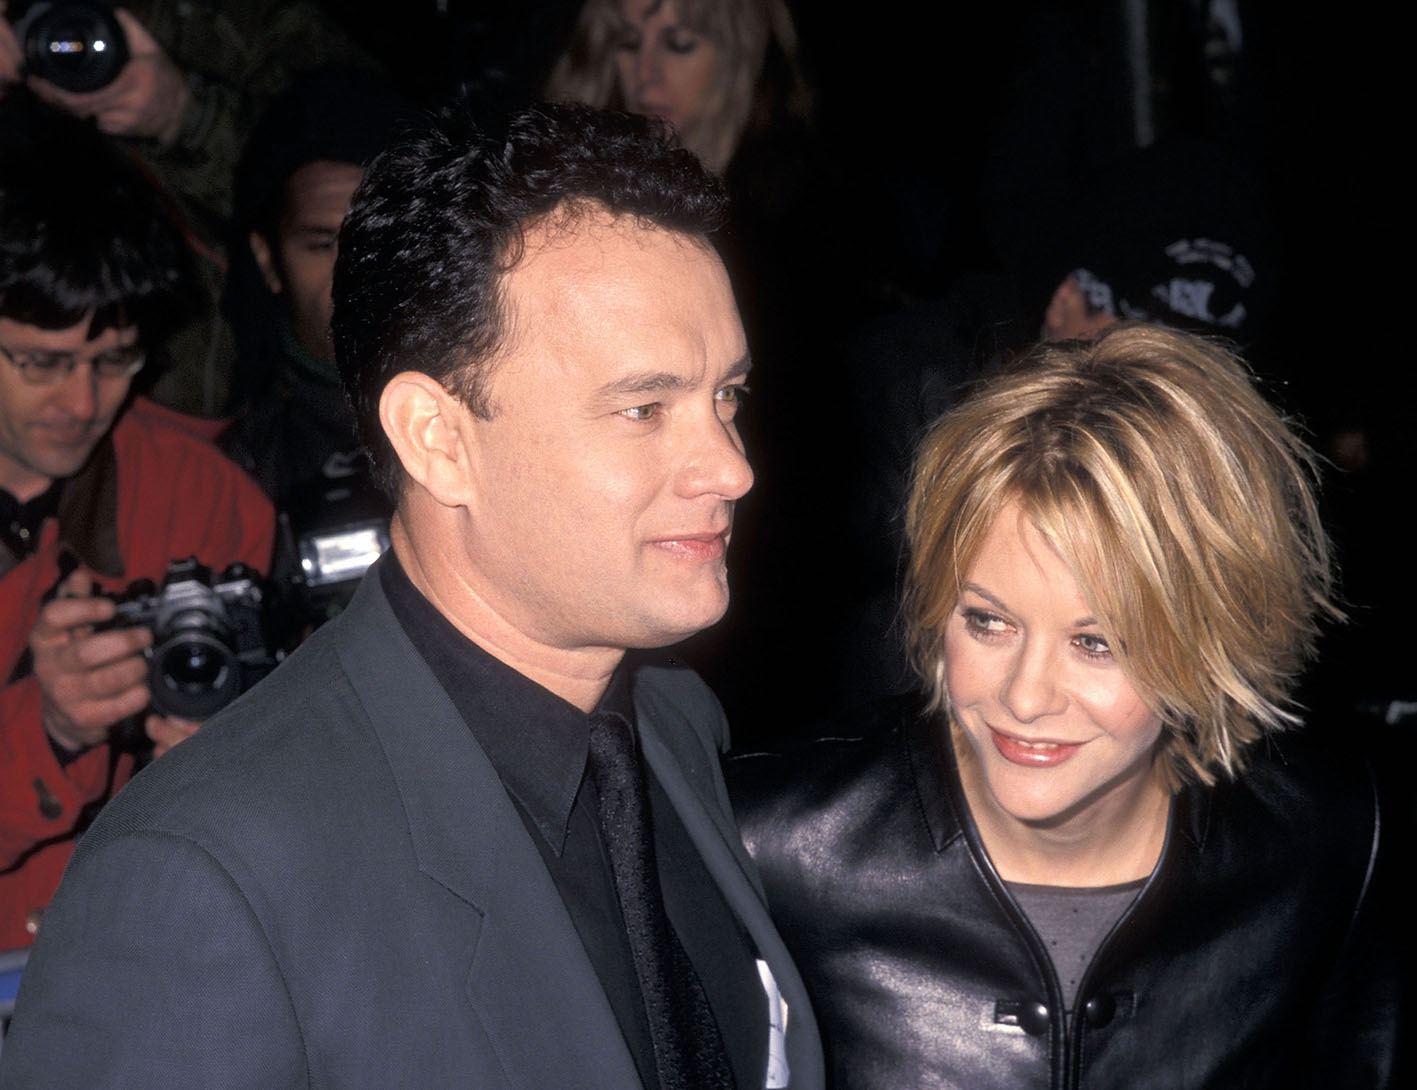 O Tom Hanks και η Meg Ryan παρευρέθηκαν στην πρεμιέρα της ταινίας "You've Got Mail" στη Νέα Υόρκη, στις 10 Δεκεμβρίου 1998.